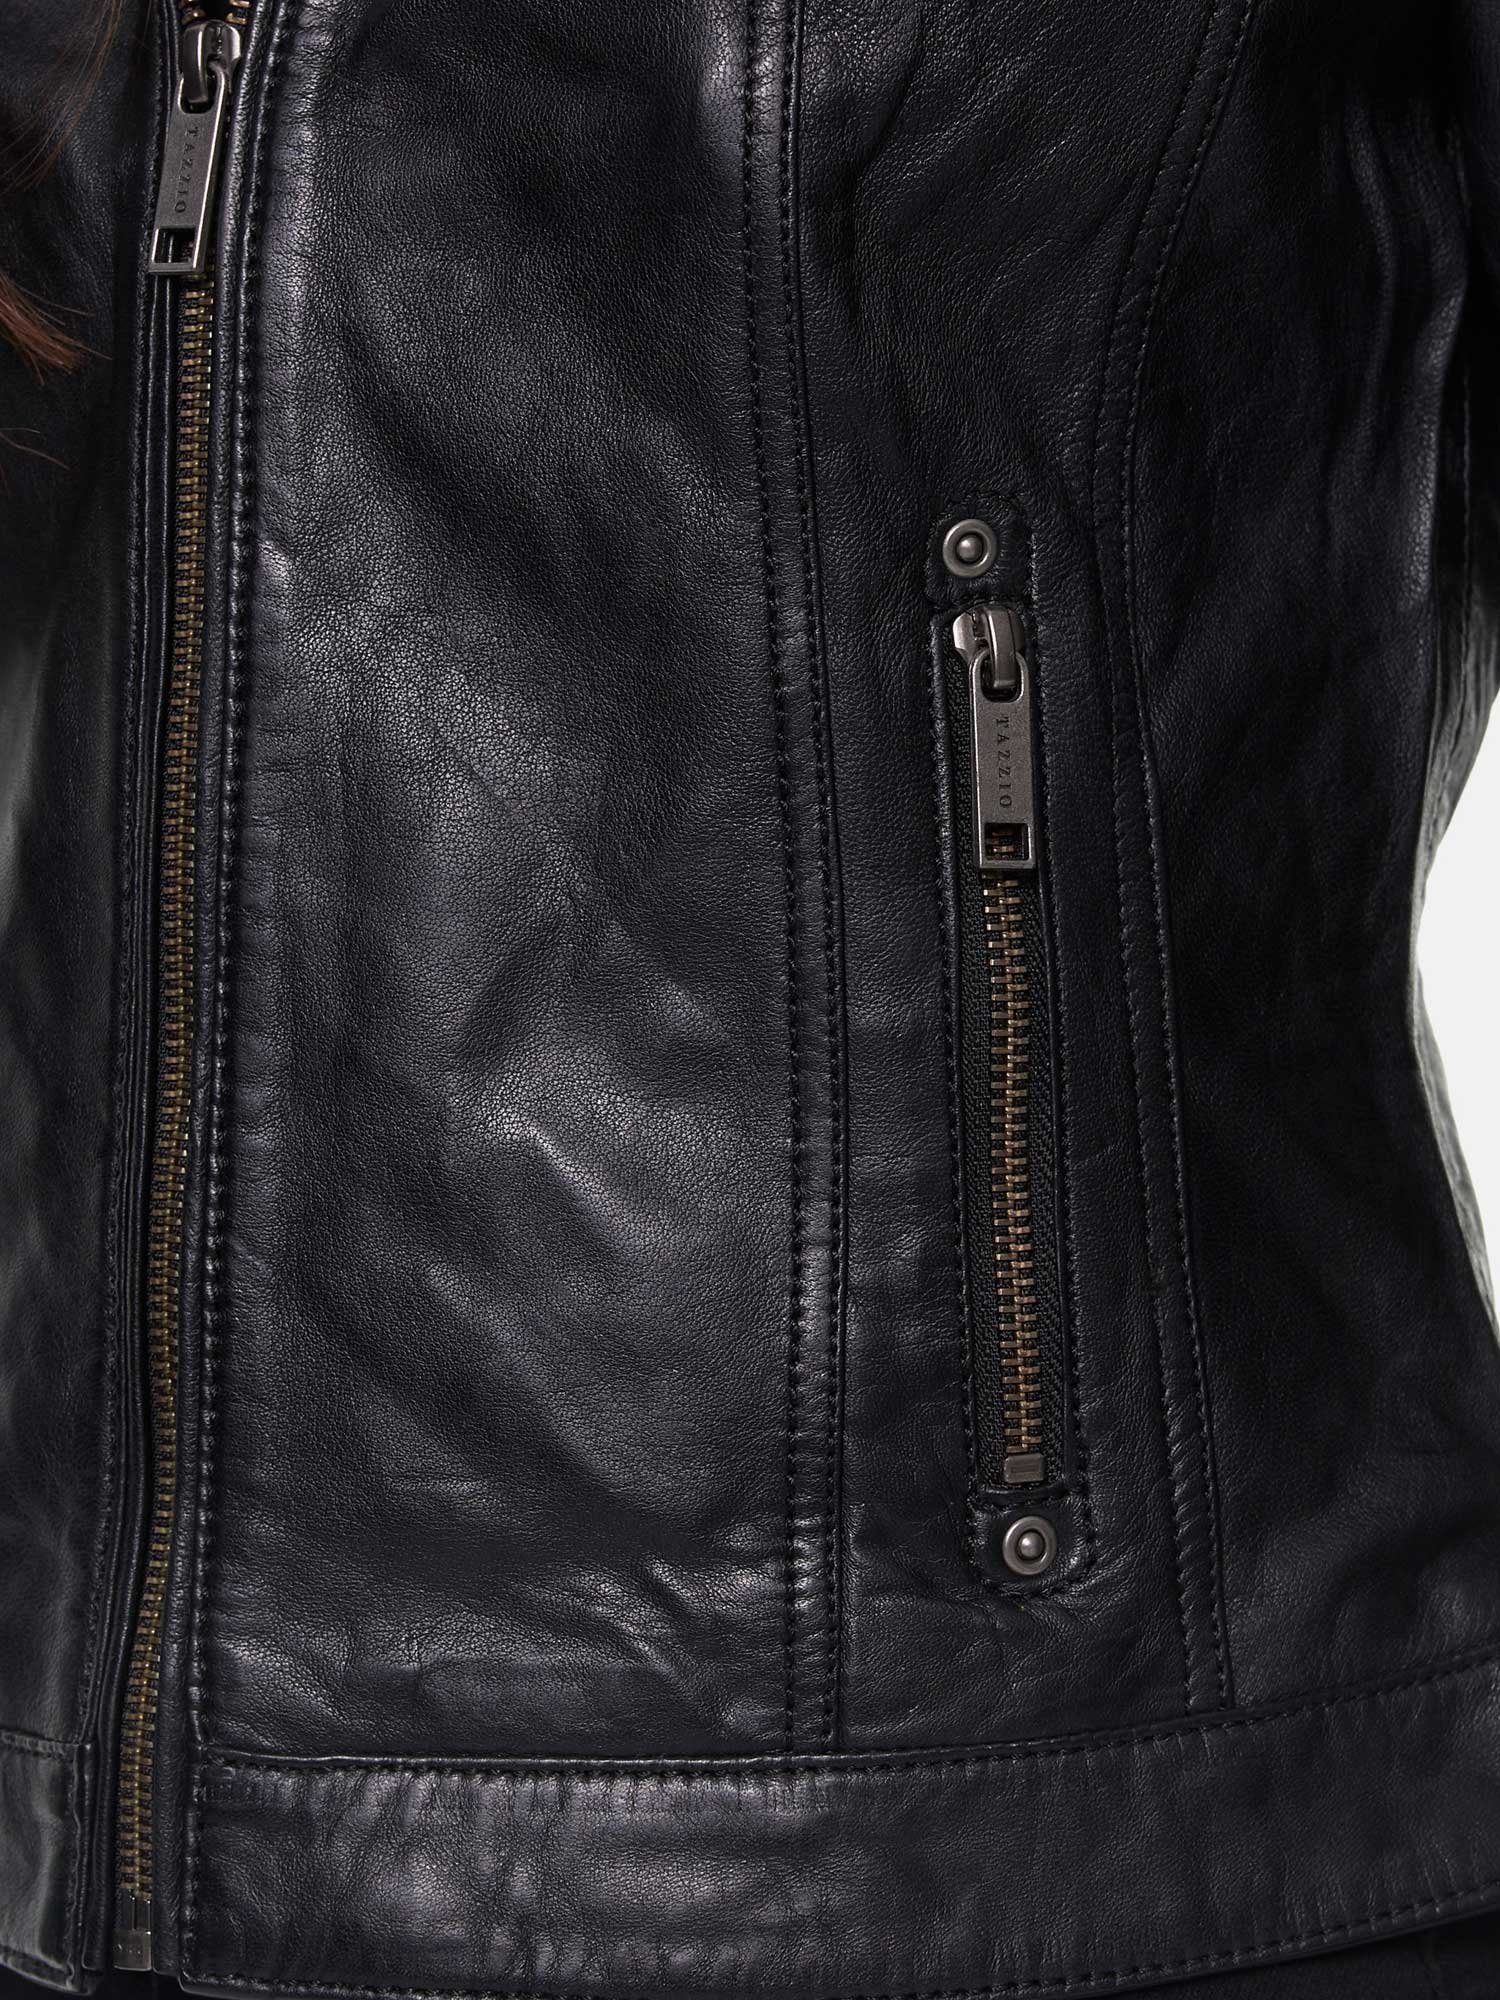 Tazzio Lederjacke F503 Biker schwarz Look Damen Leder im abnehmbarer Jacke mit Kapuze